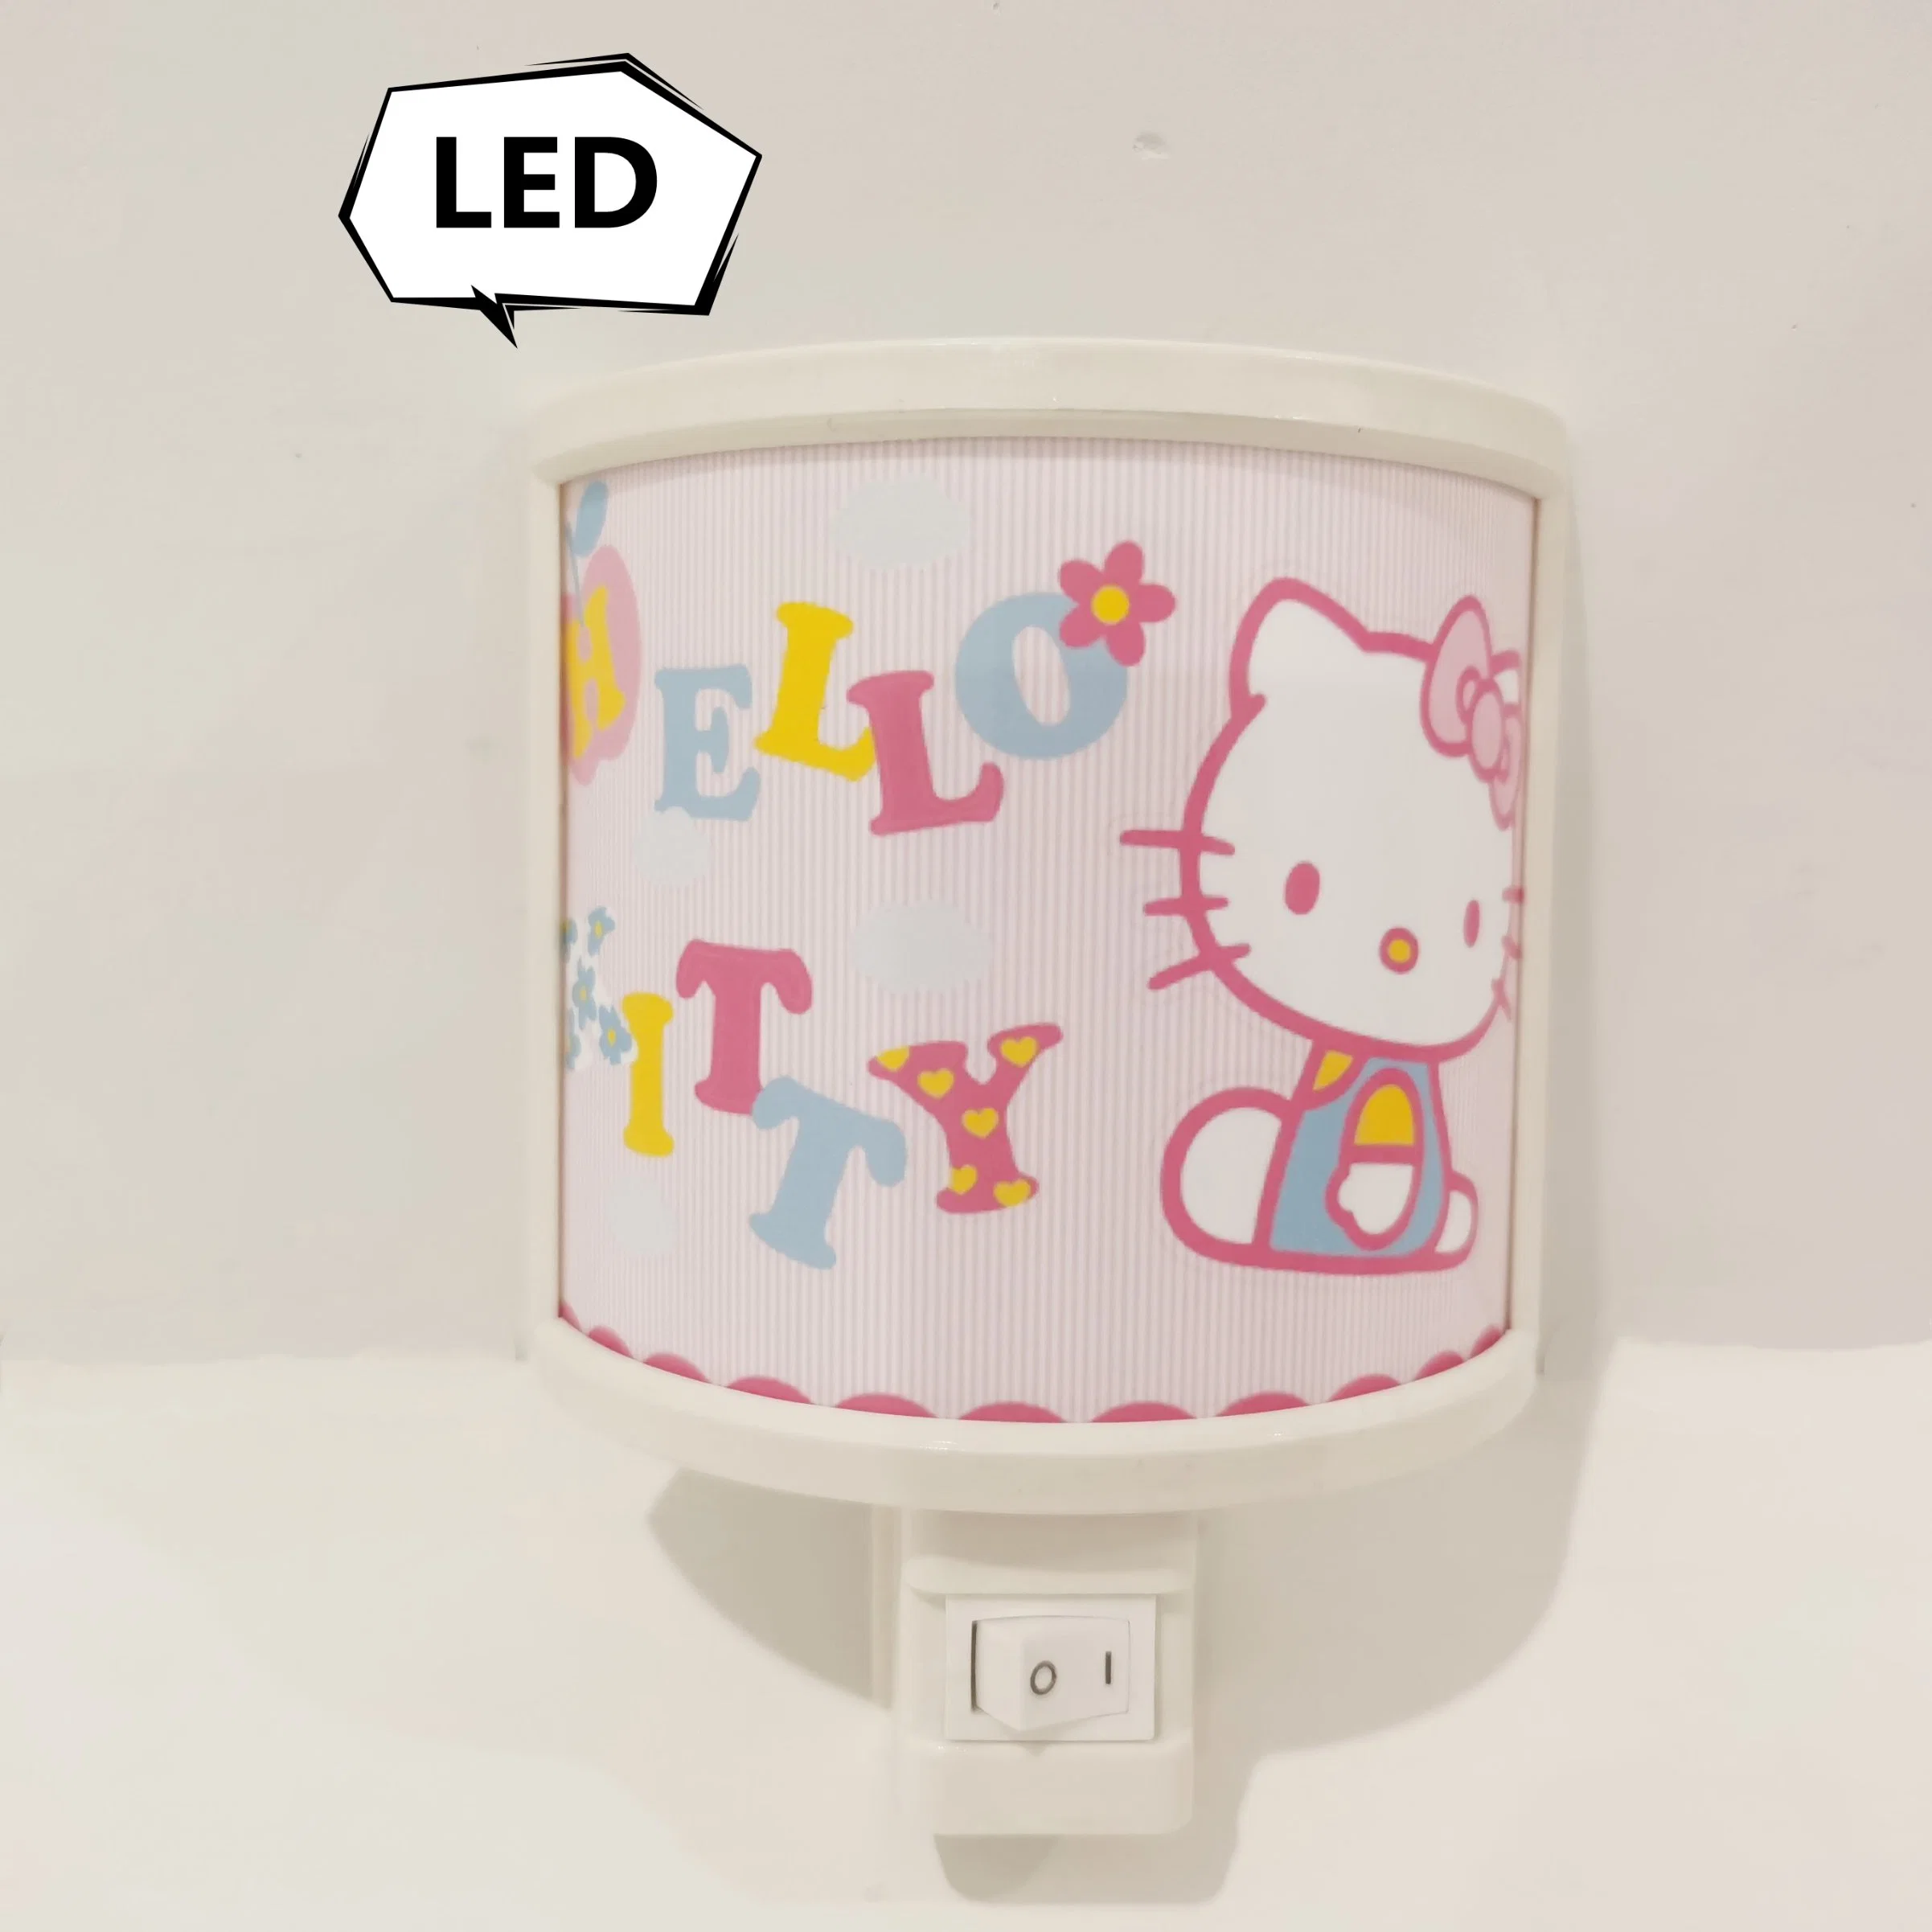 Heimbeleuchtung, Tischlampen, Plug-in Kids Photo Light, LED Night Light